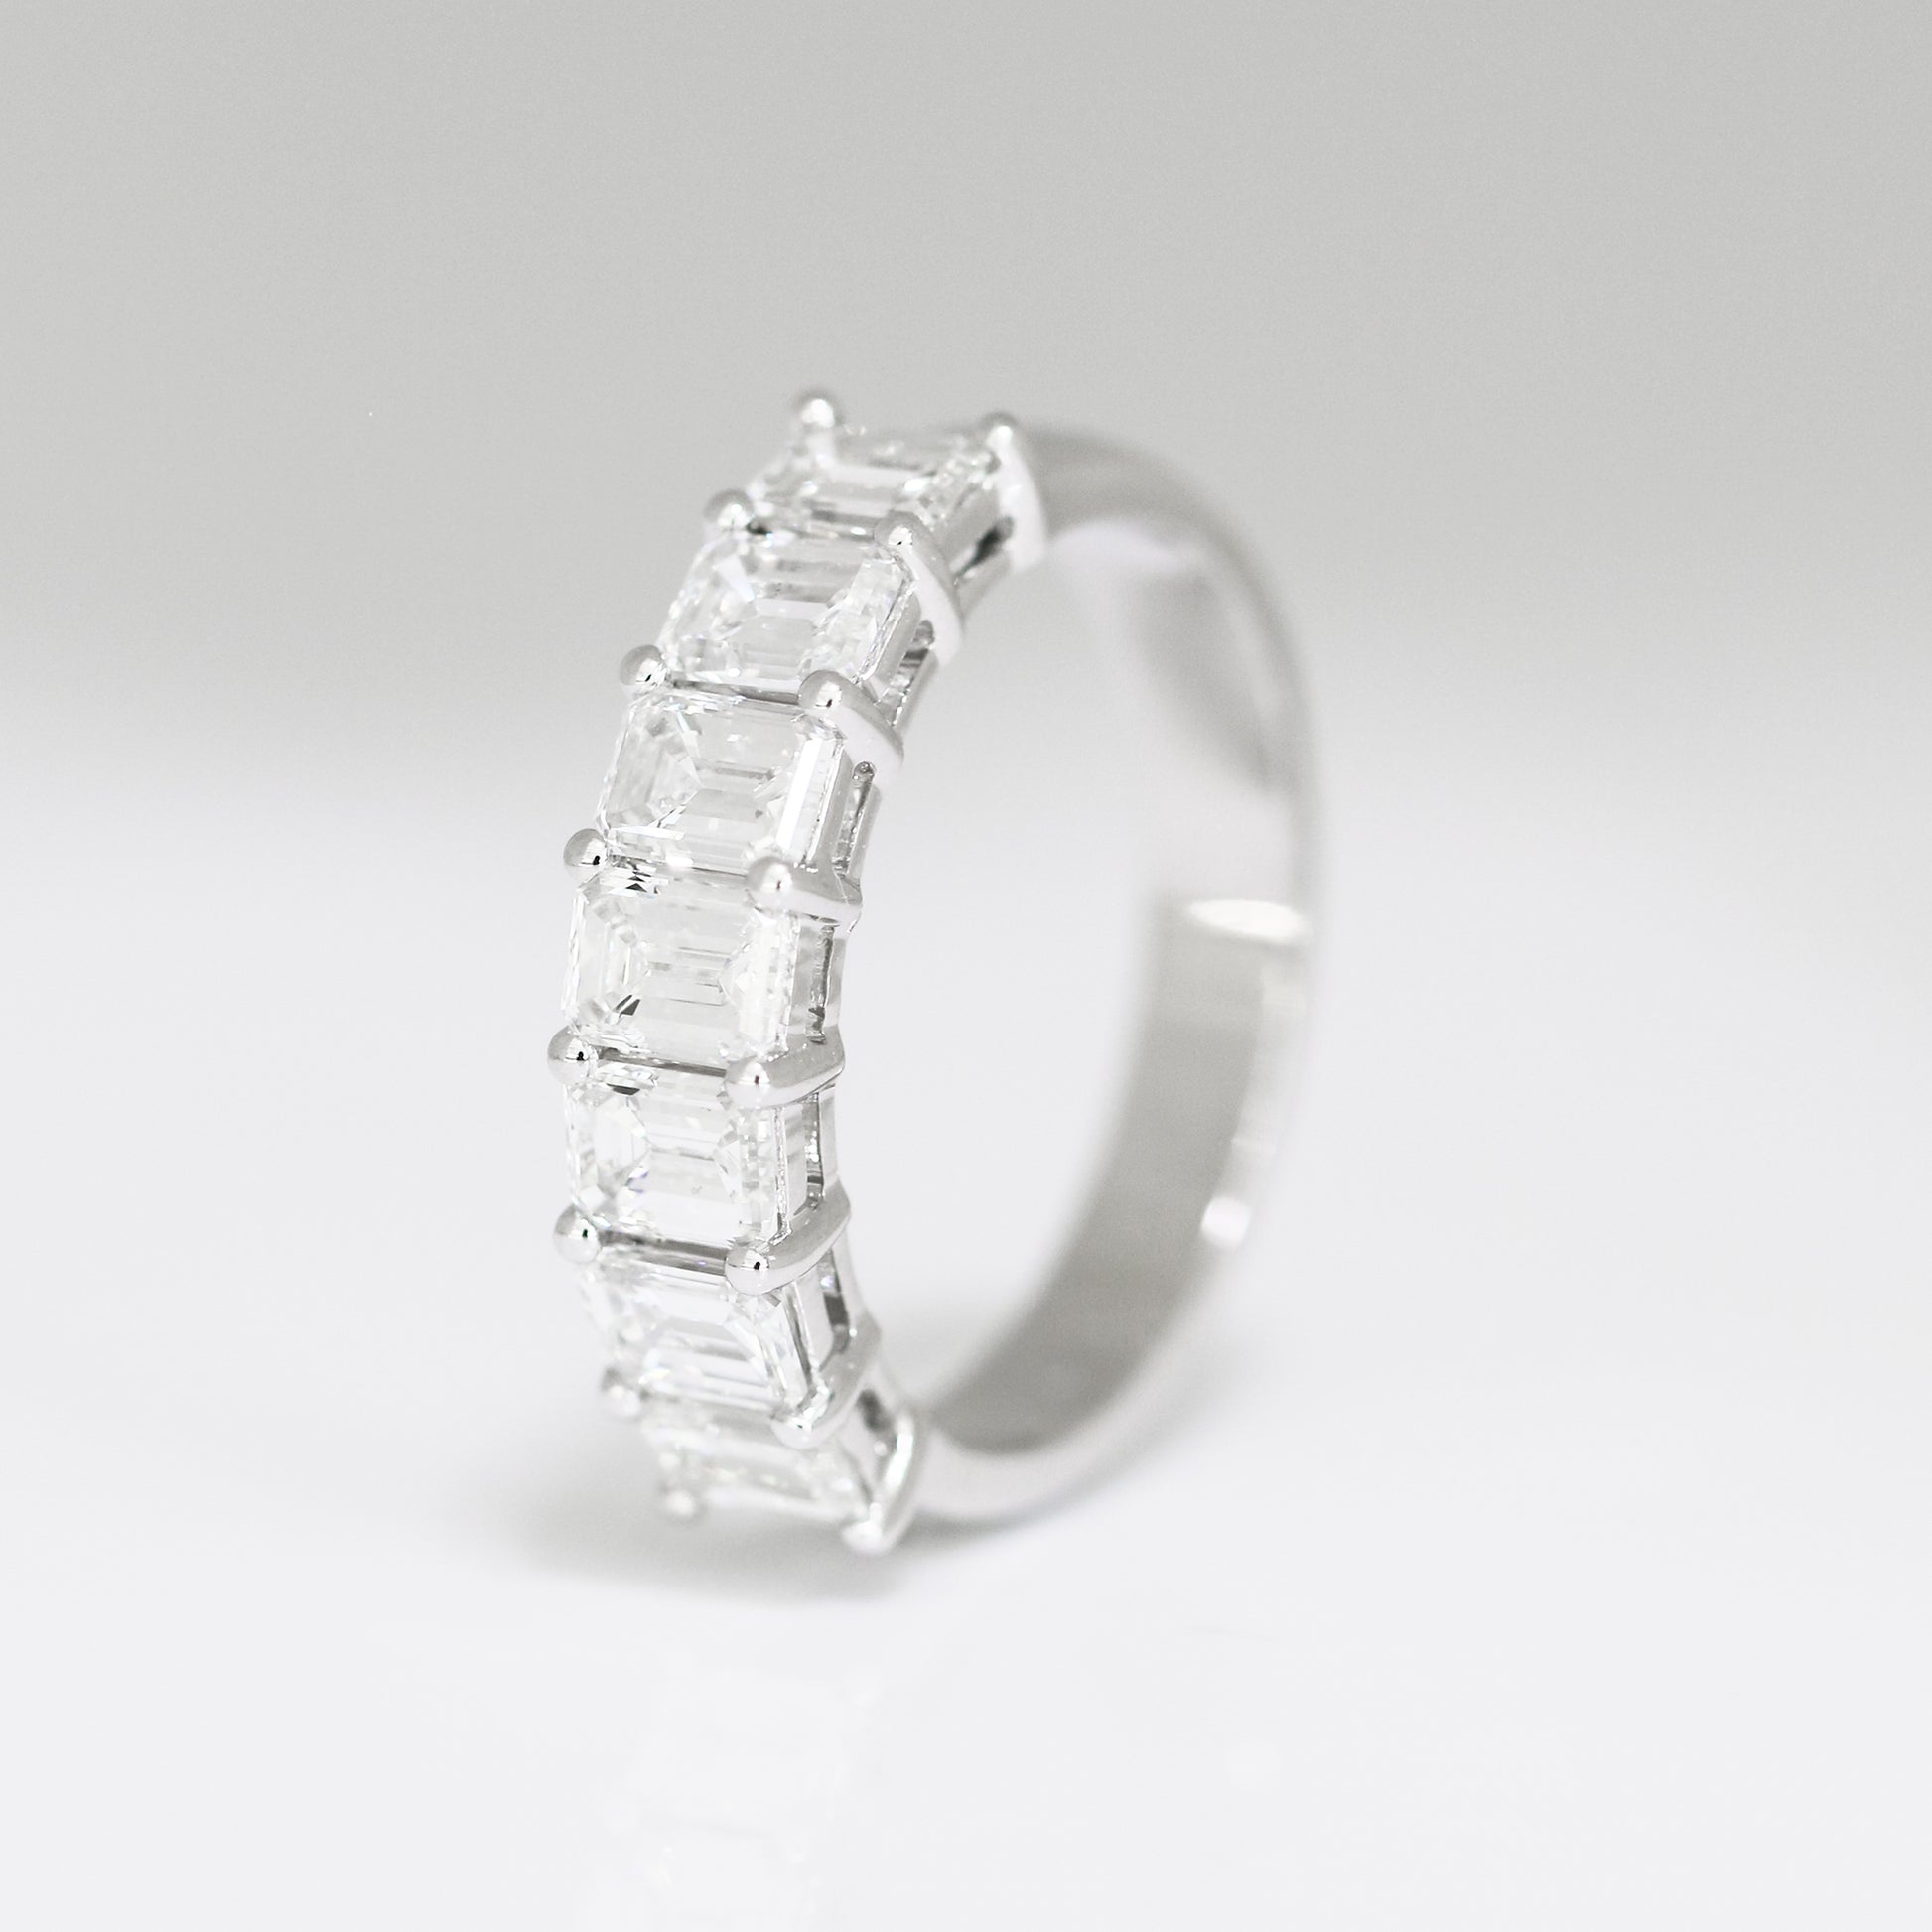 18k白金祖母綠切割鑽石排戒指側面 18k White Gold 1.75ct Emerald Diamond Ring on side view